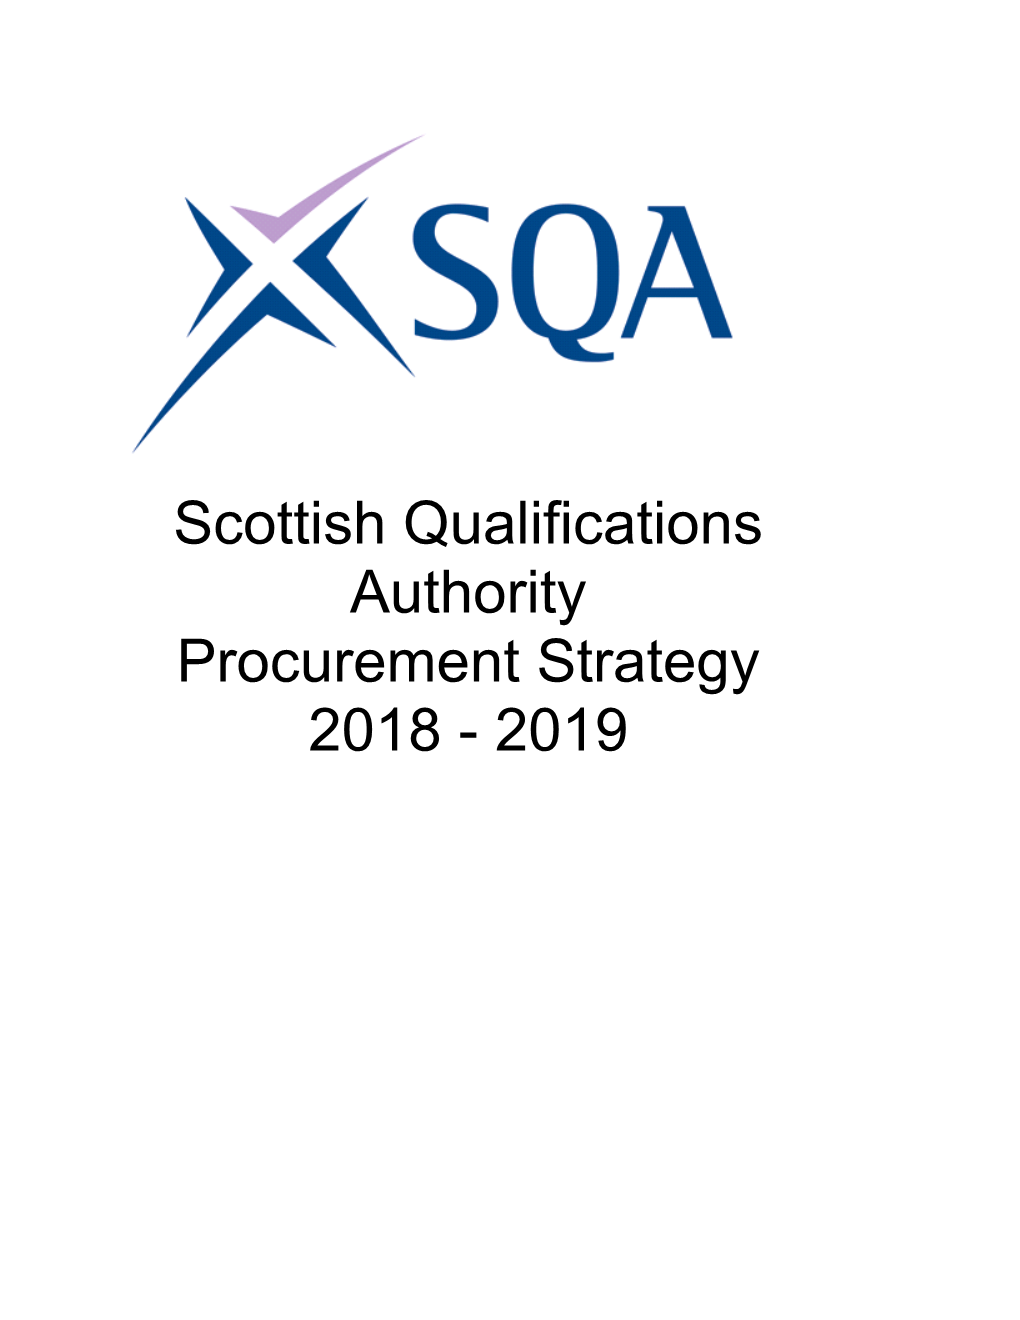 Scottish Qualifications Authority Procurement Strategy 2018-19